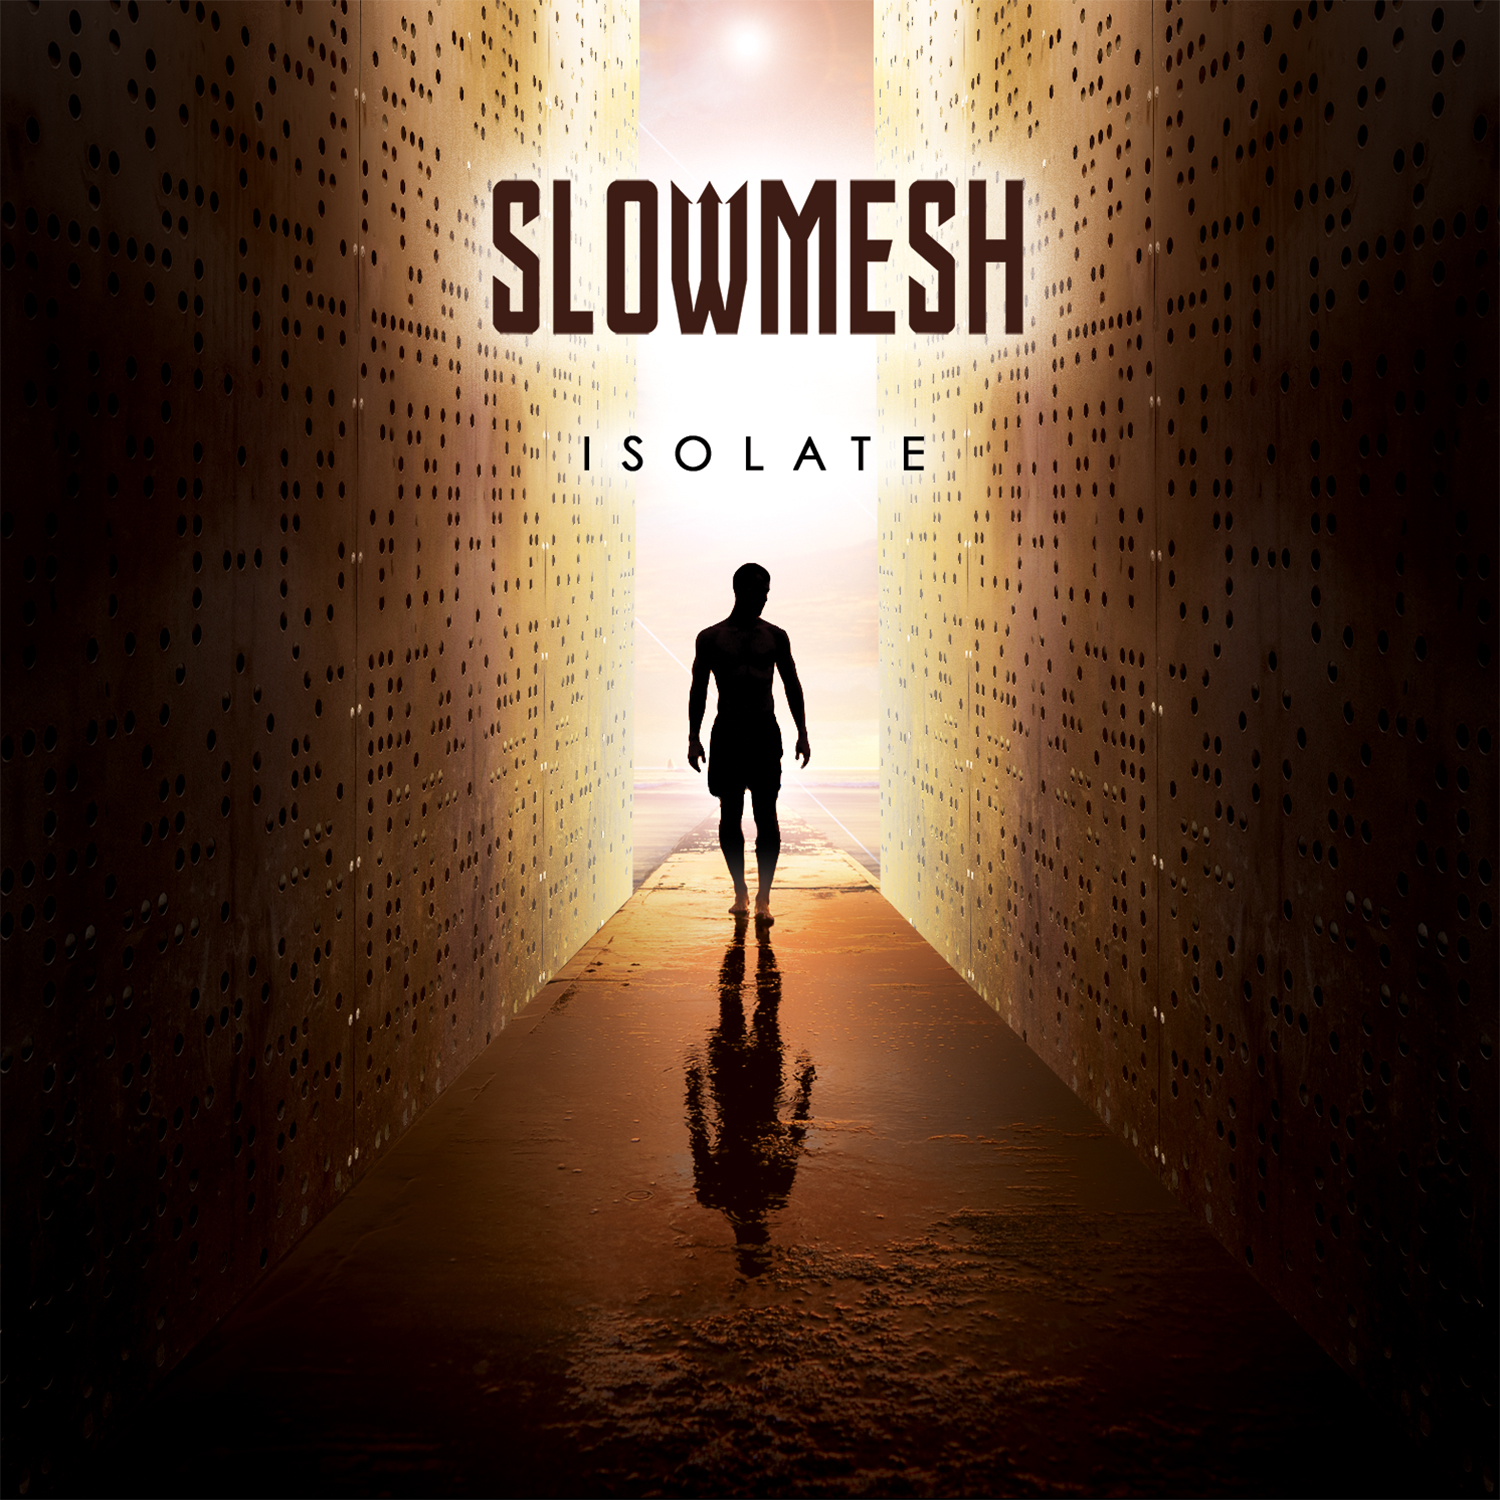 slowmesh_isolate_front_1500x1500_rgb.jpg